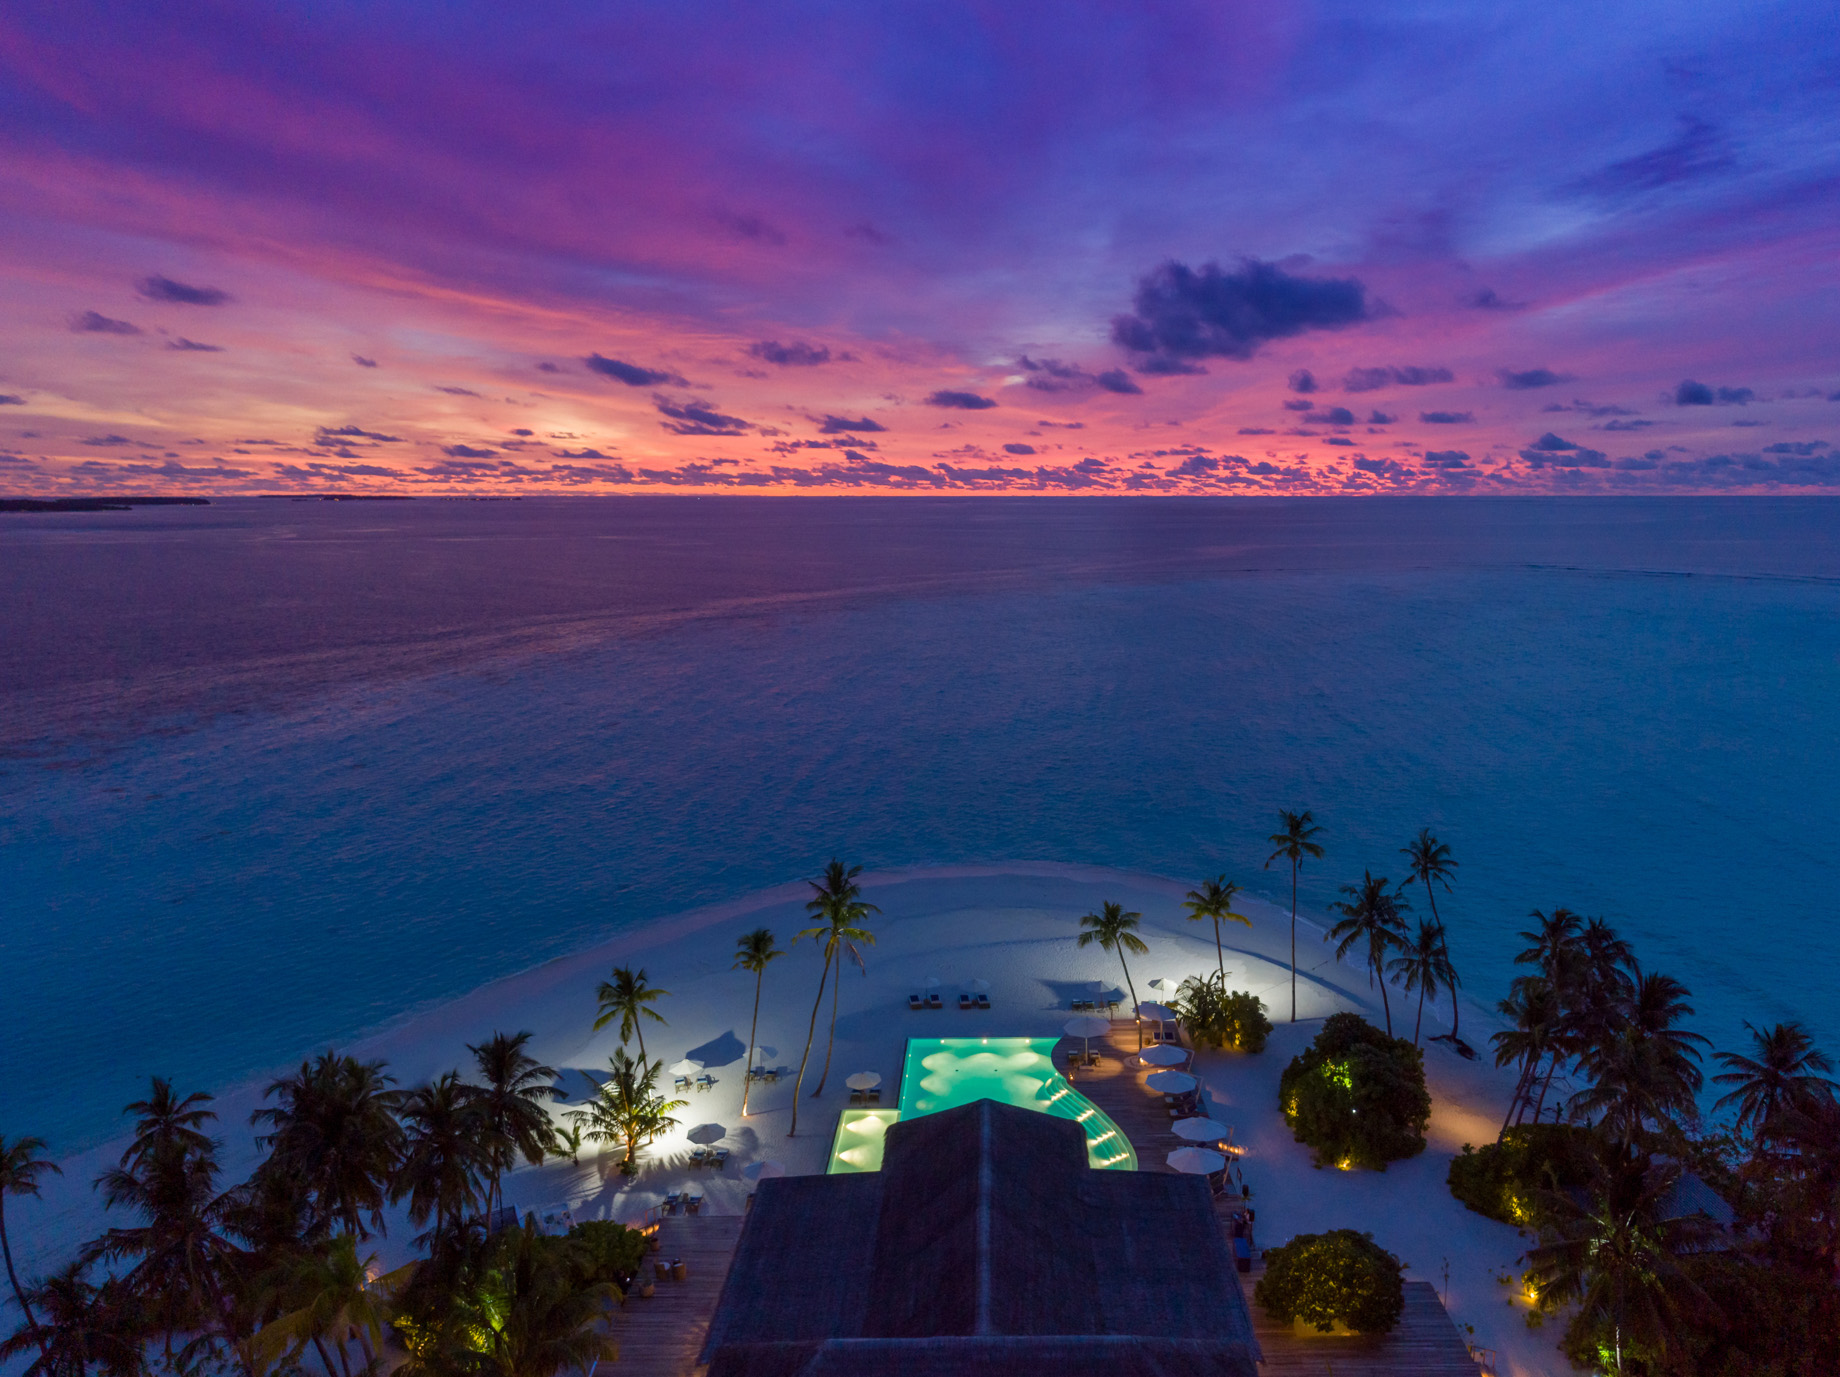 Baglioni Resort Maldives - Maagau Island, Rinbudhoo, Maldives - Gusto Restaurant and Pool Aerial View Sunset